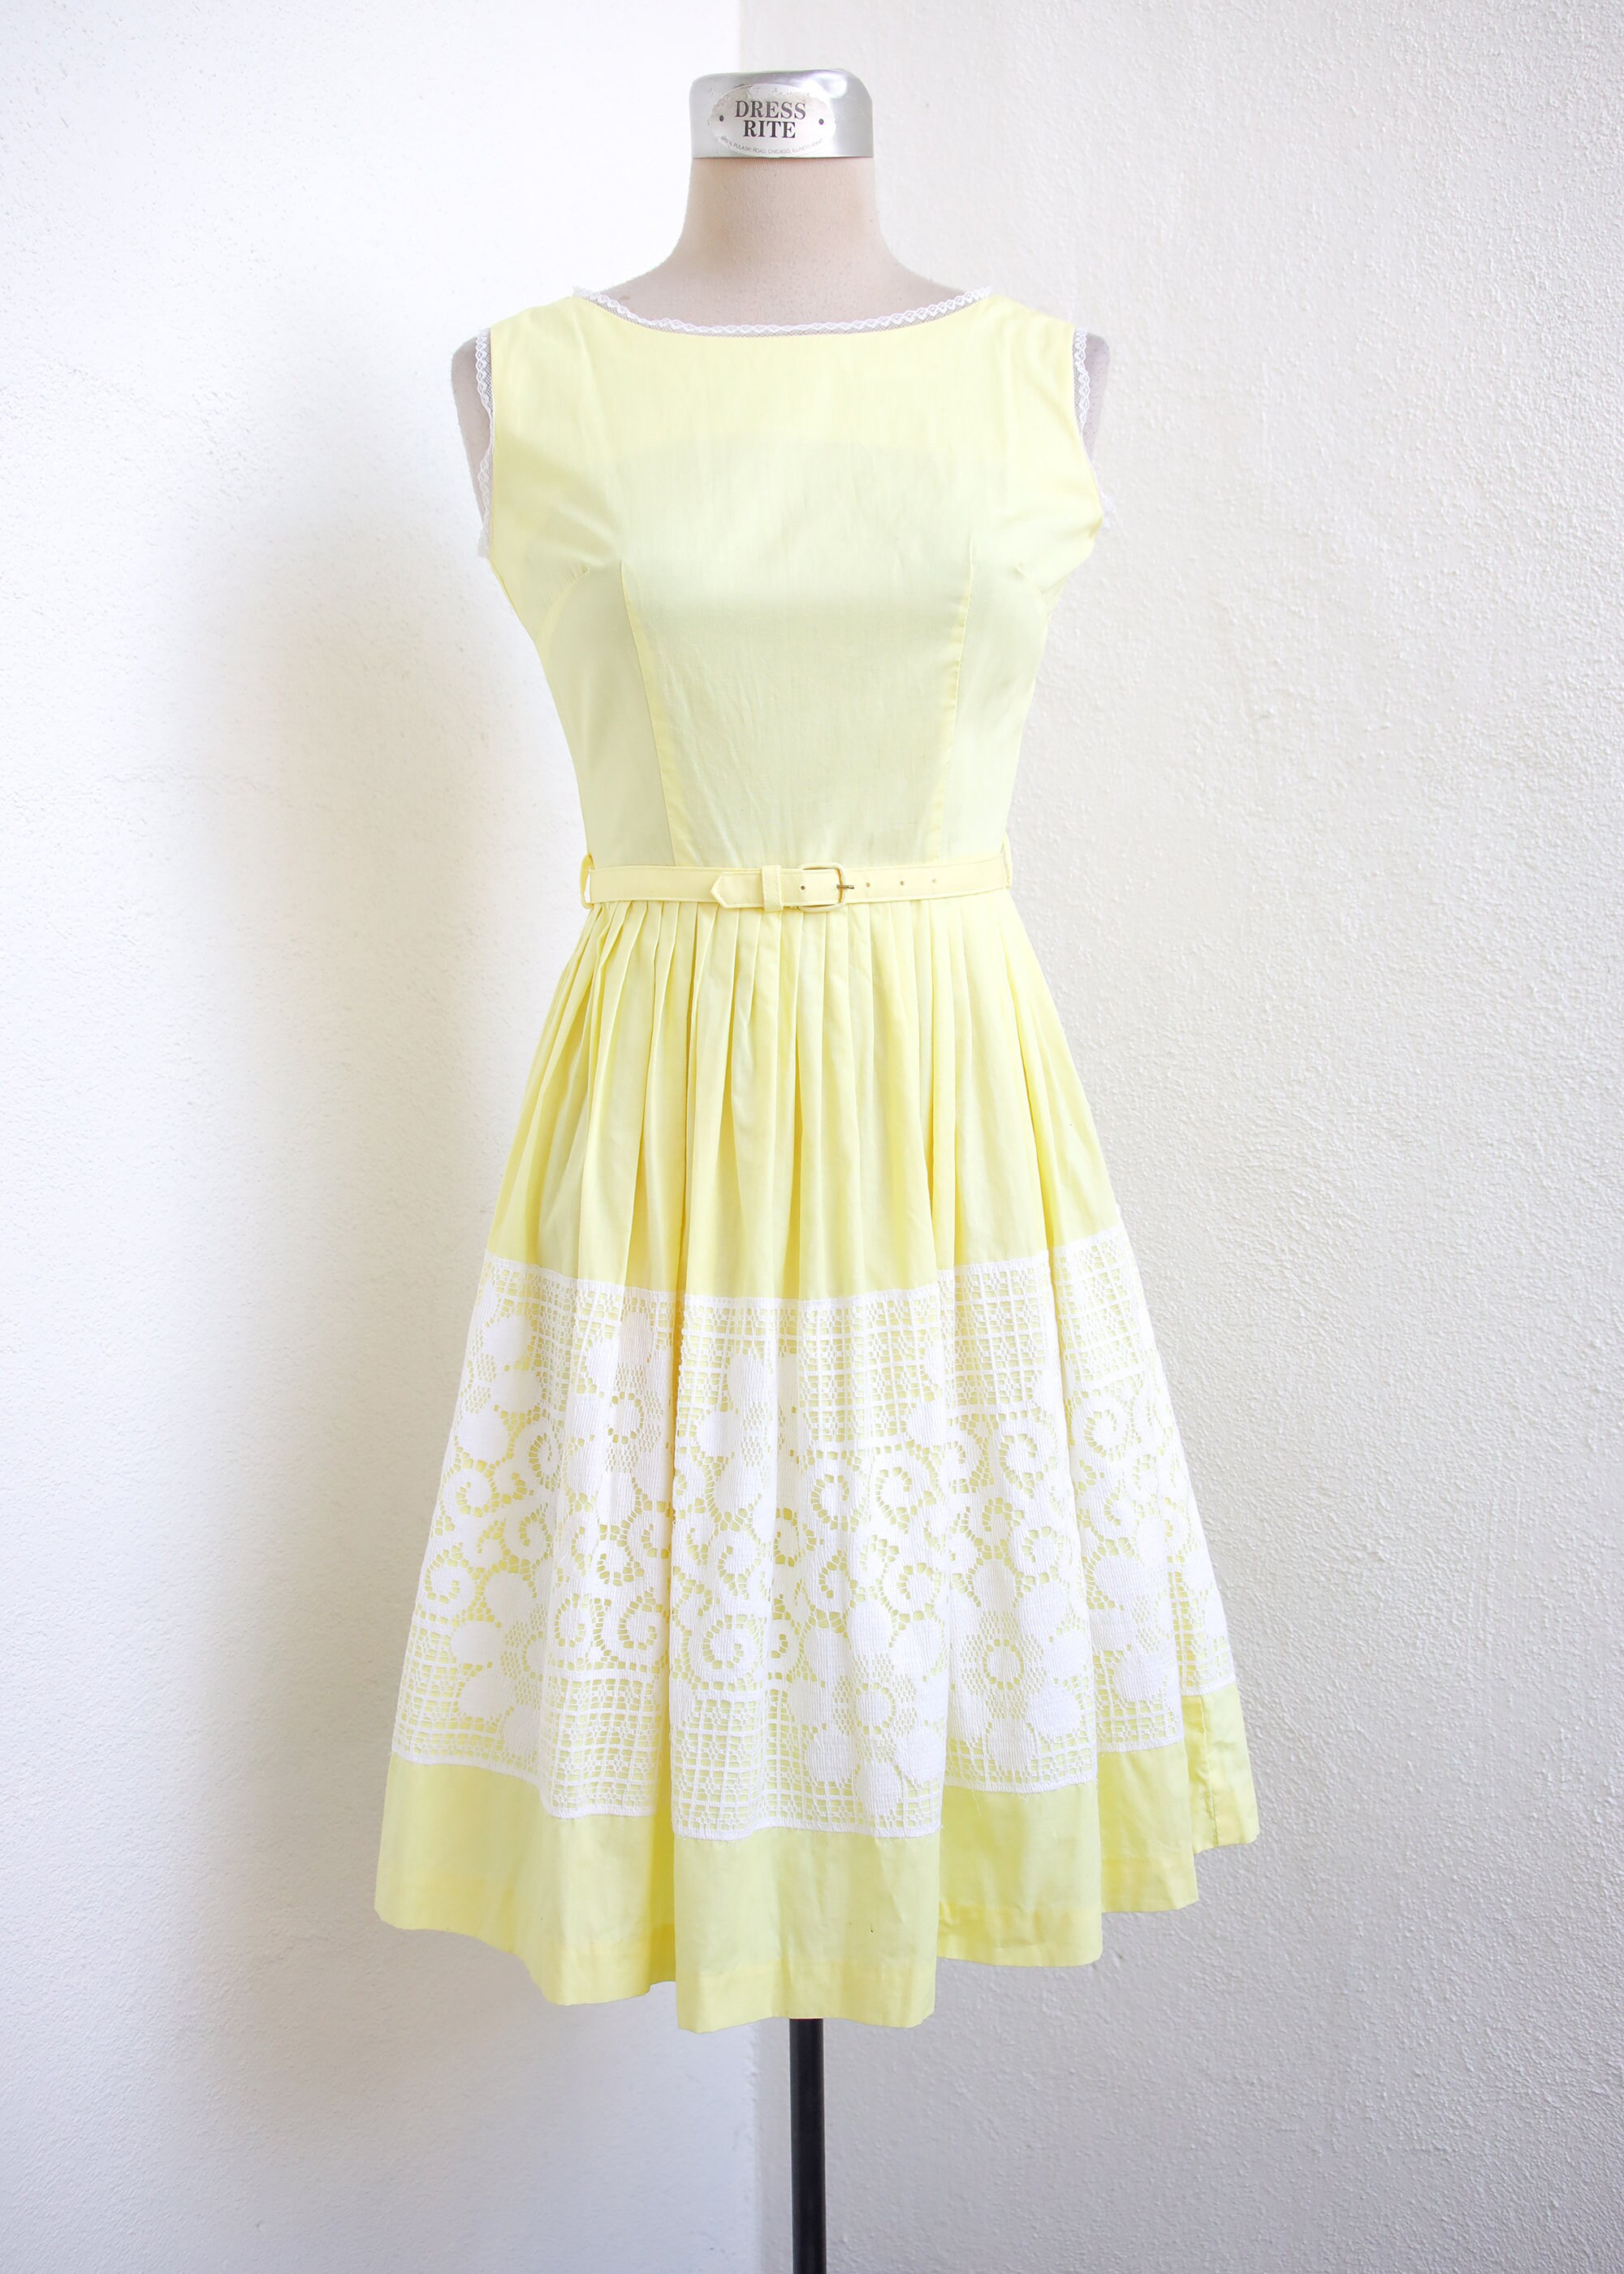 Pale Yellow Sundress 1960s Sleeveless Daydress with Belt | Etsy